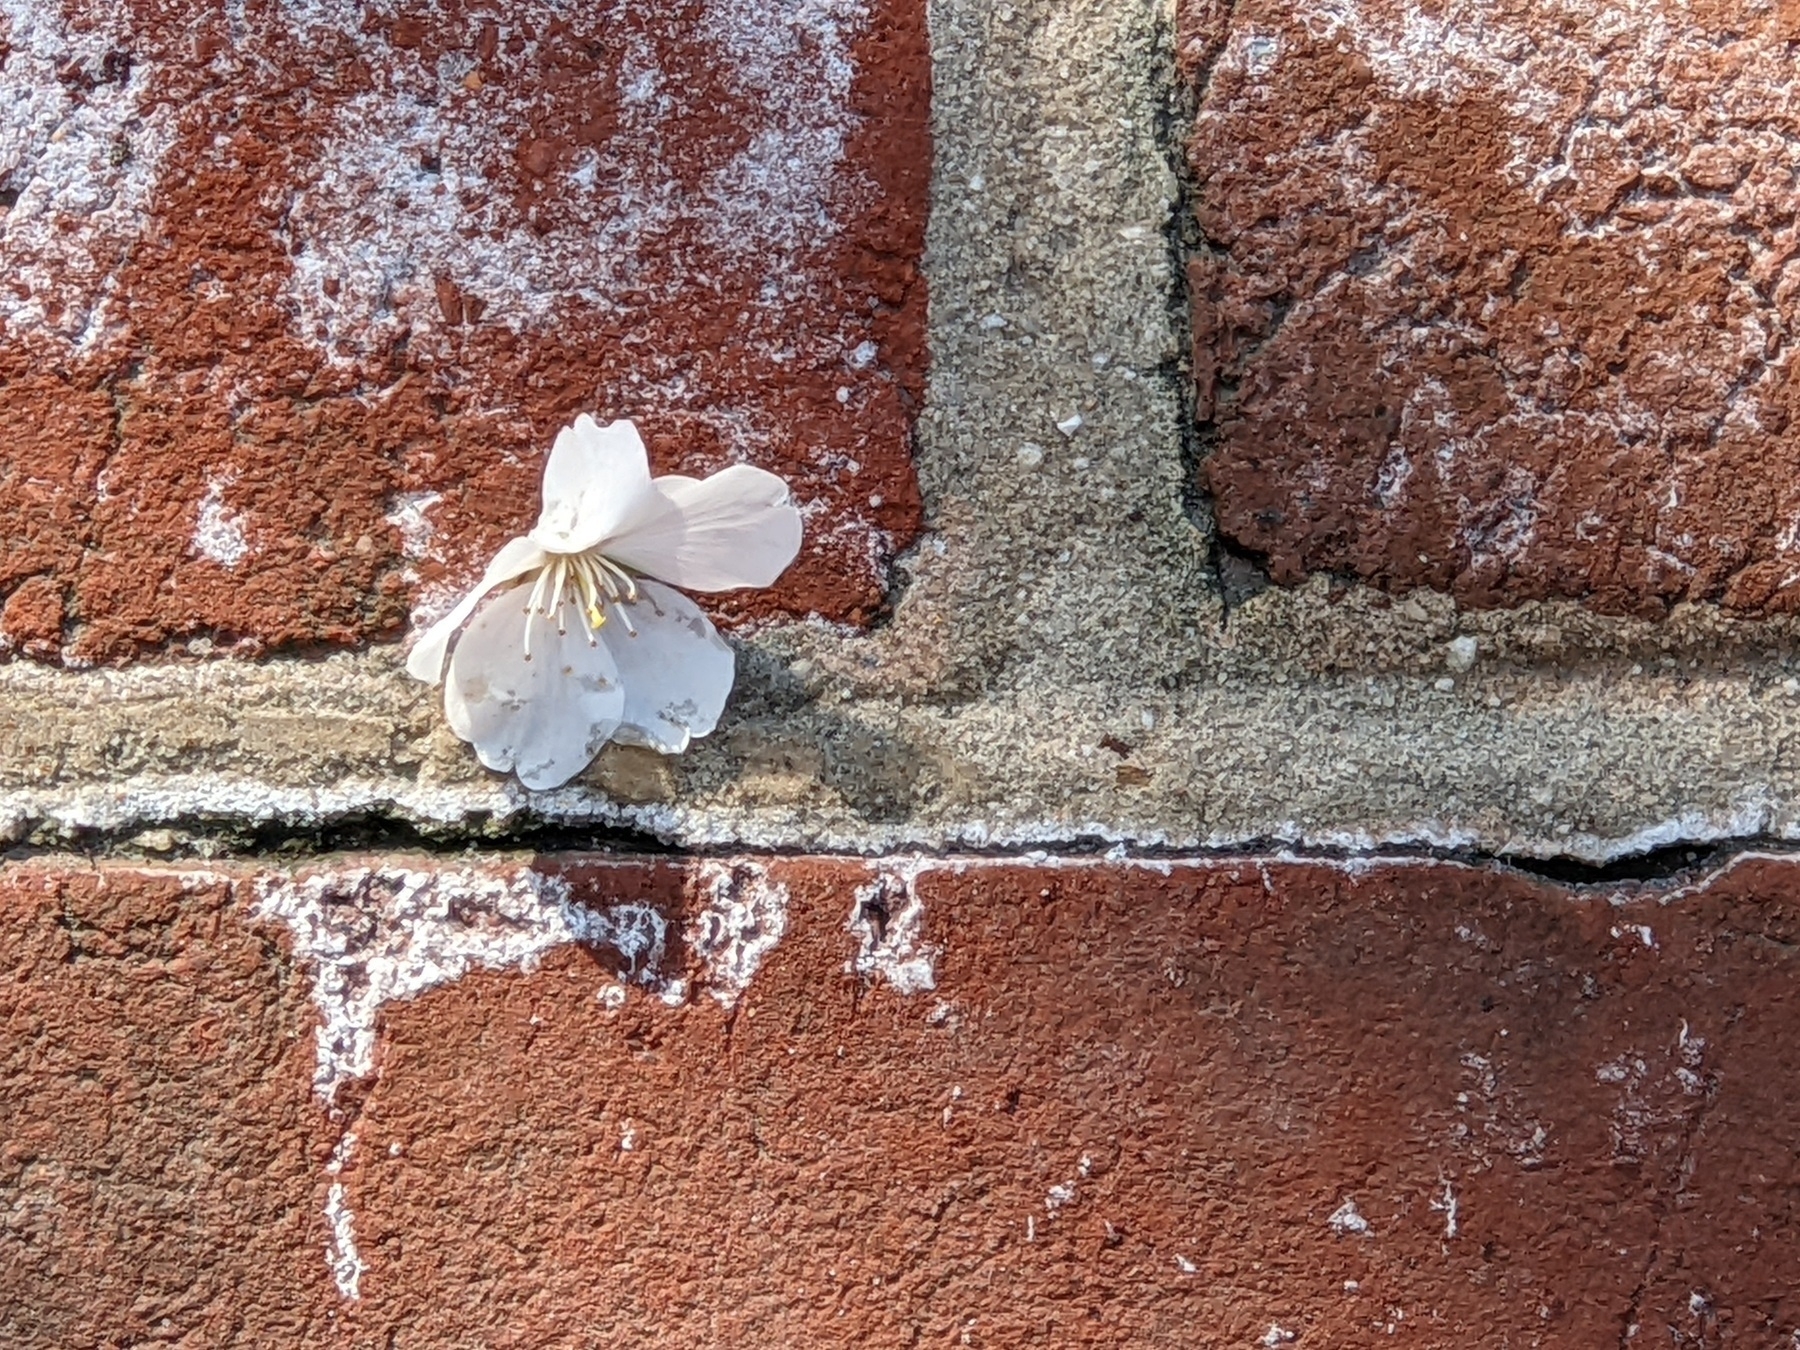 a single fallen cherry blossom resting on a brick walkway